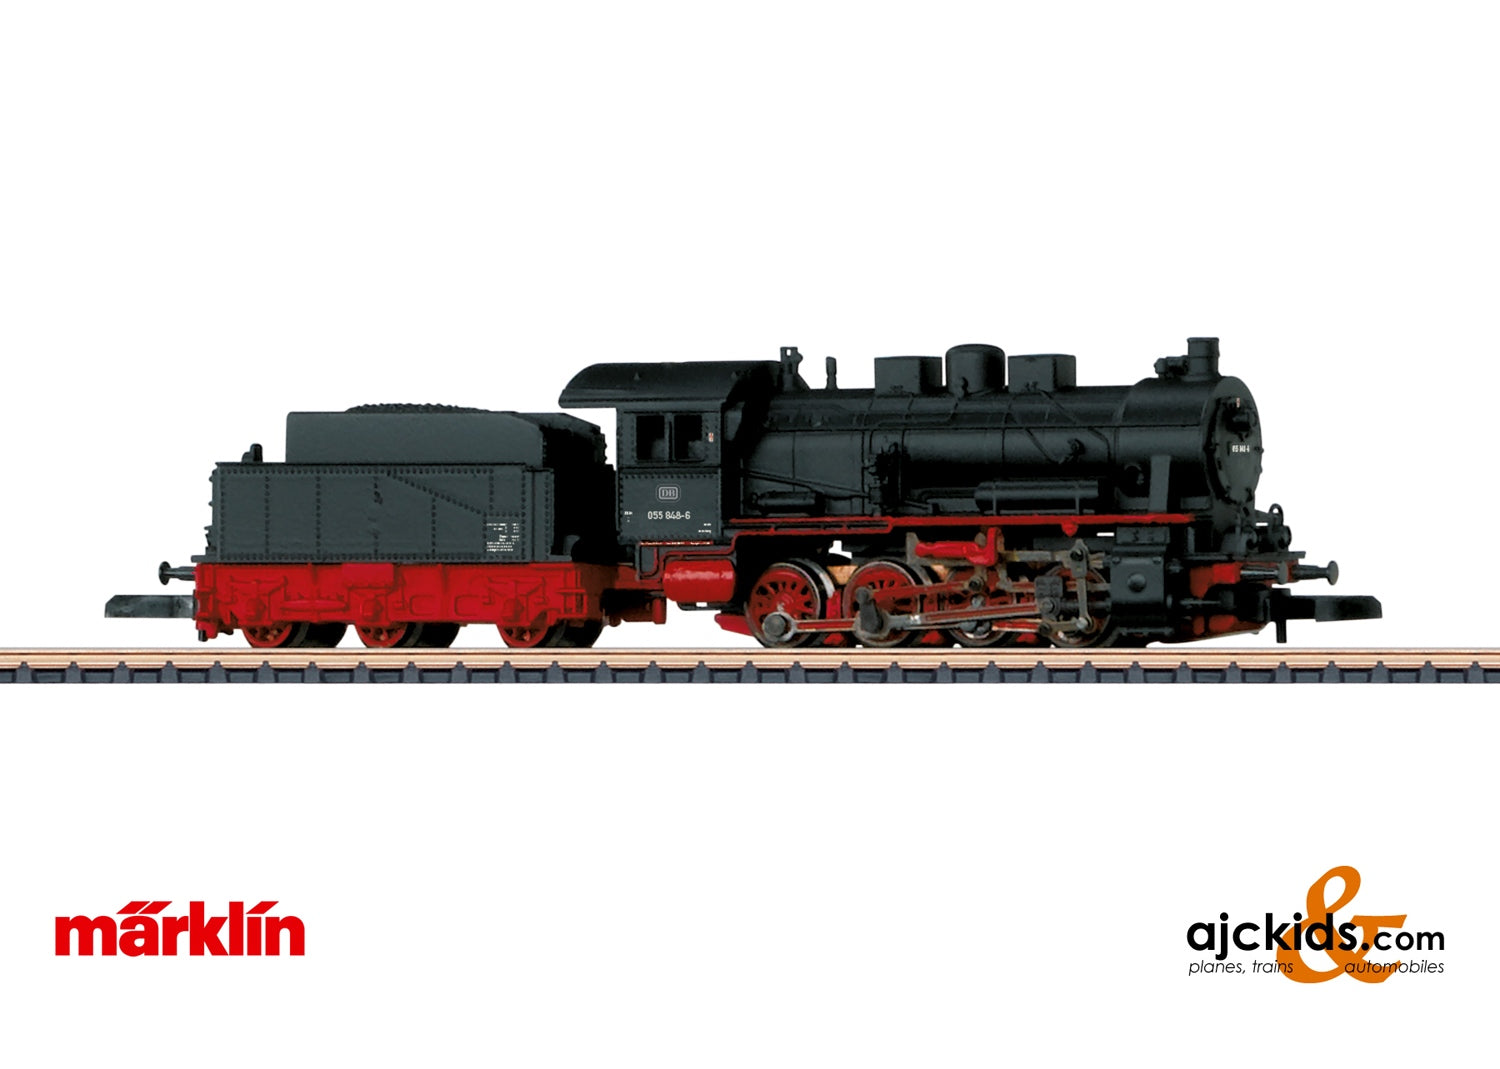 Marklin 88986 DB Class 055 Steam Locomotive at Ajckids.com